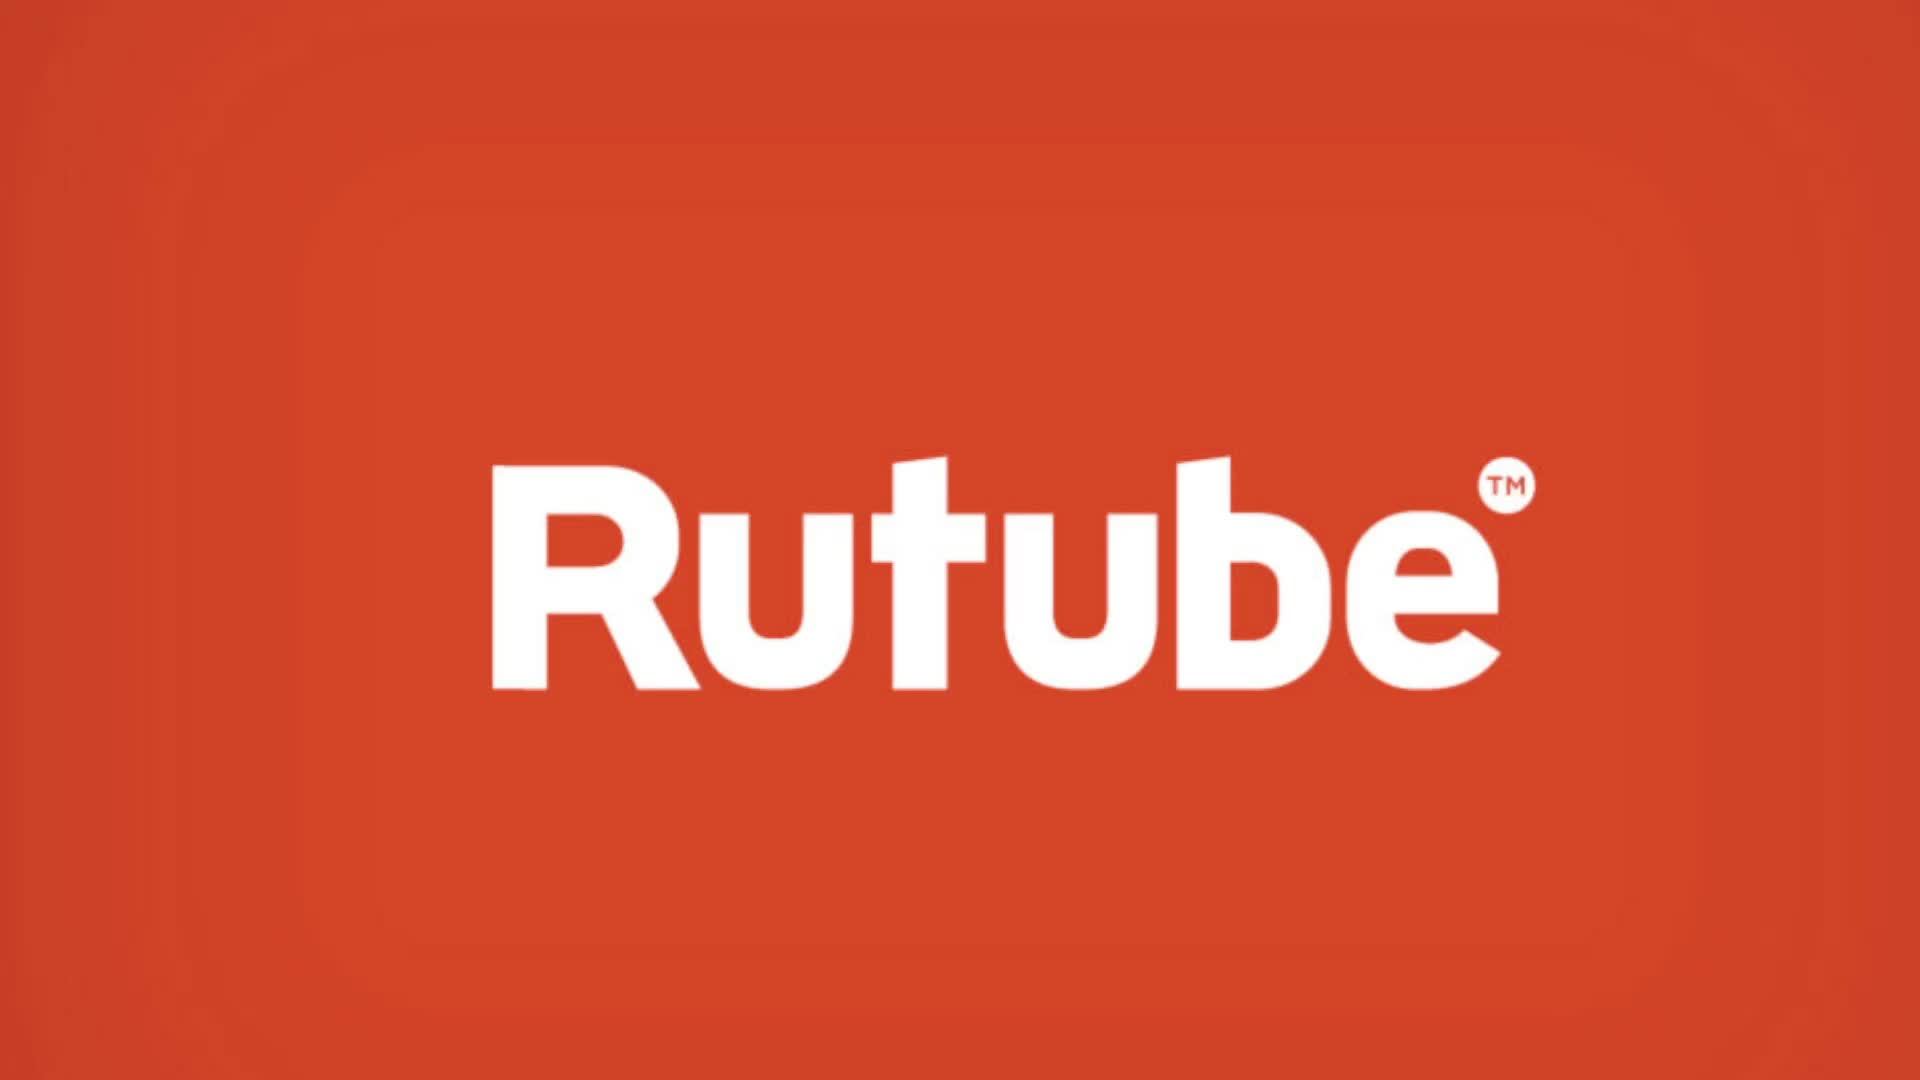 M rutube com. Rutube. Rutube логотип. Рутуб лого 2021. Рутуб фото.